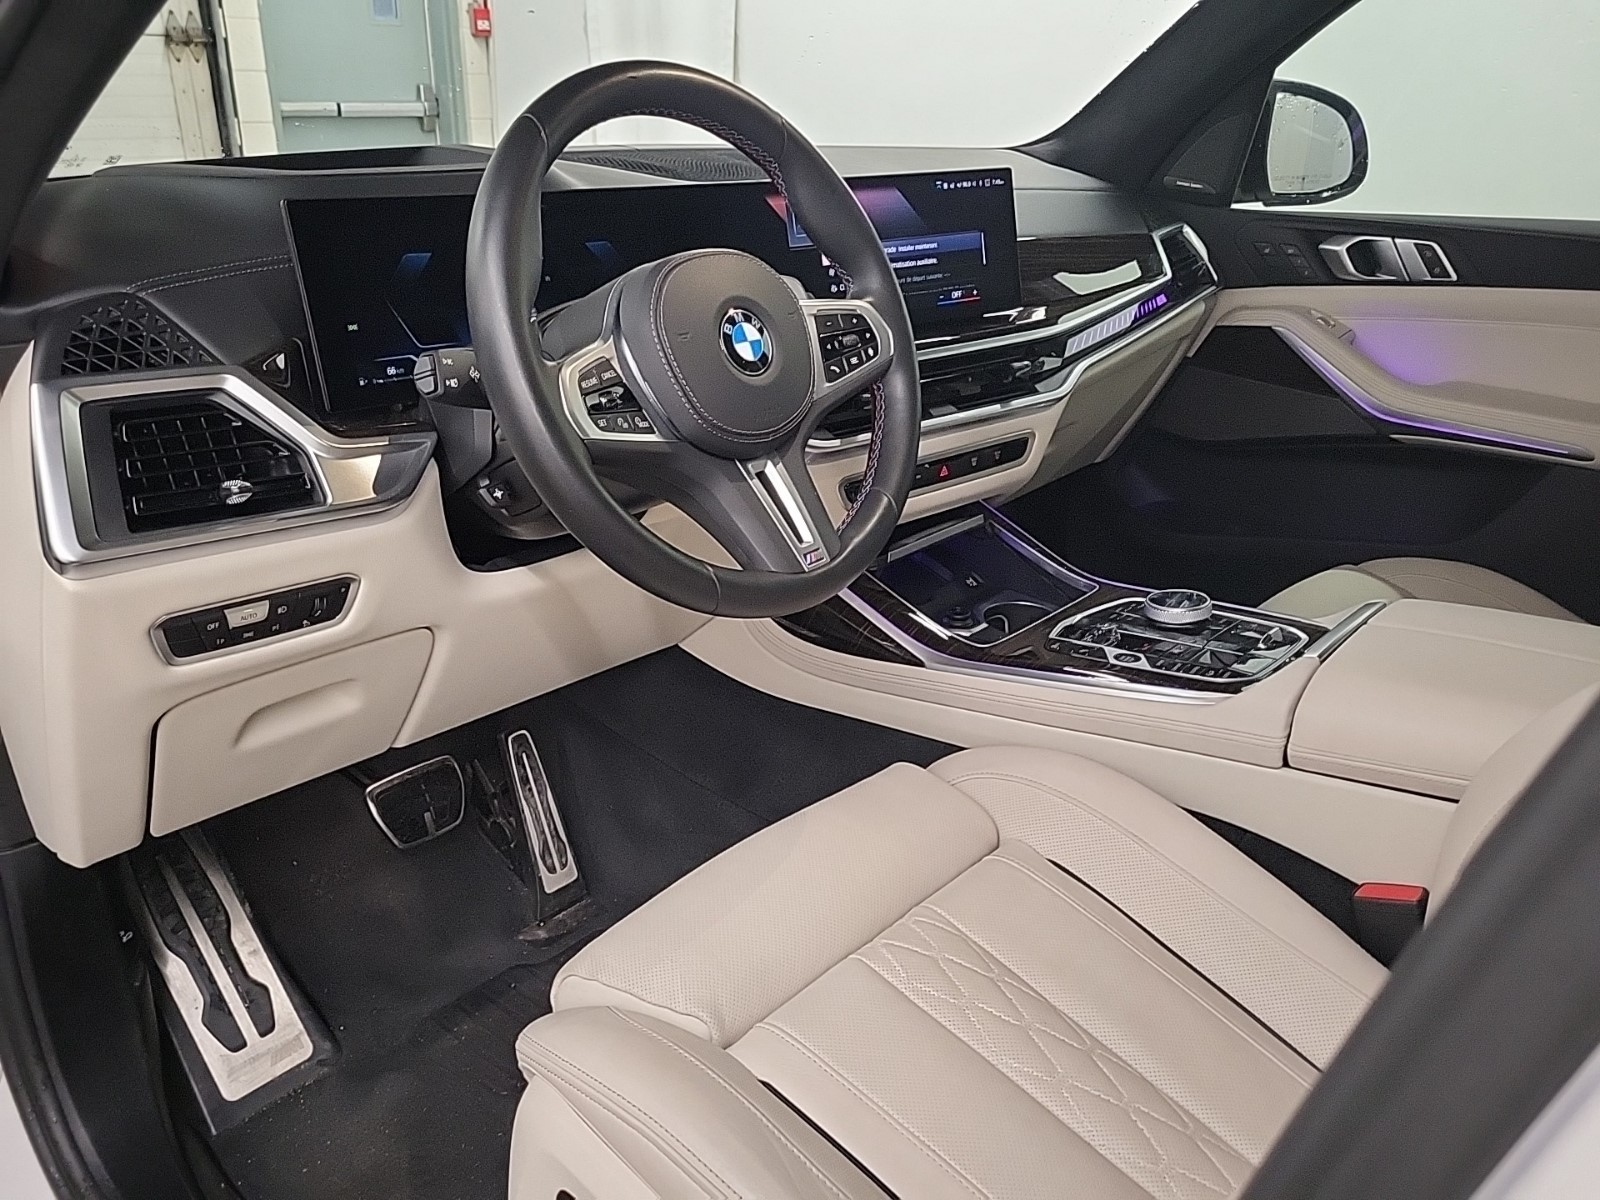 Preowned BMW X7, 4 doors, Alpine white, North York